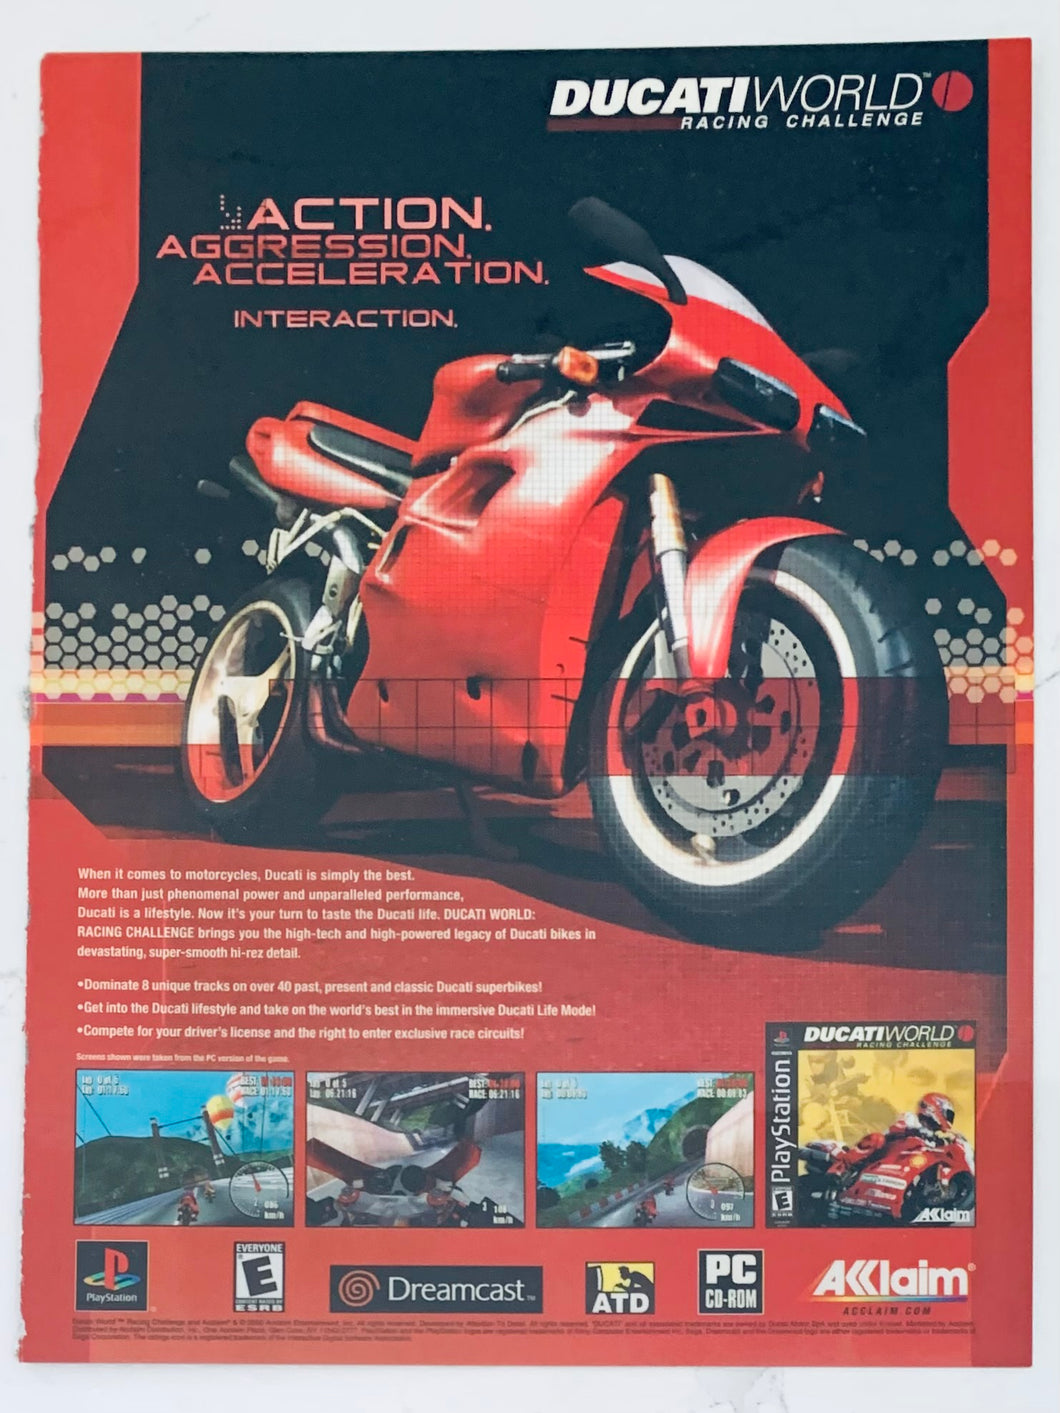 Ducati World Racing Challenge - PlayStation DC - Original Vintage Advertisement - Print Ads - Laminated A4 Poster